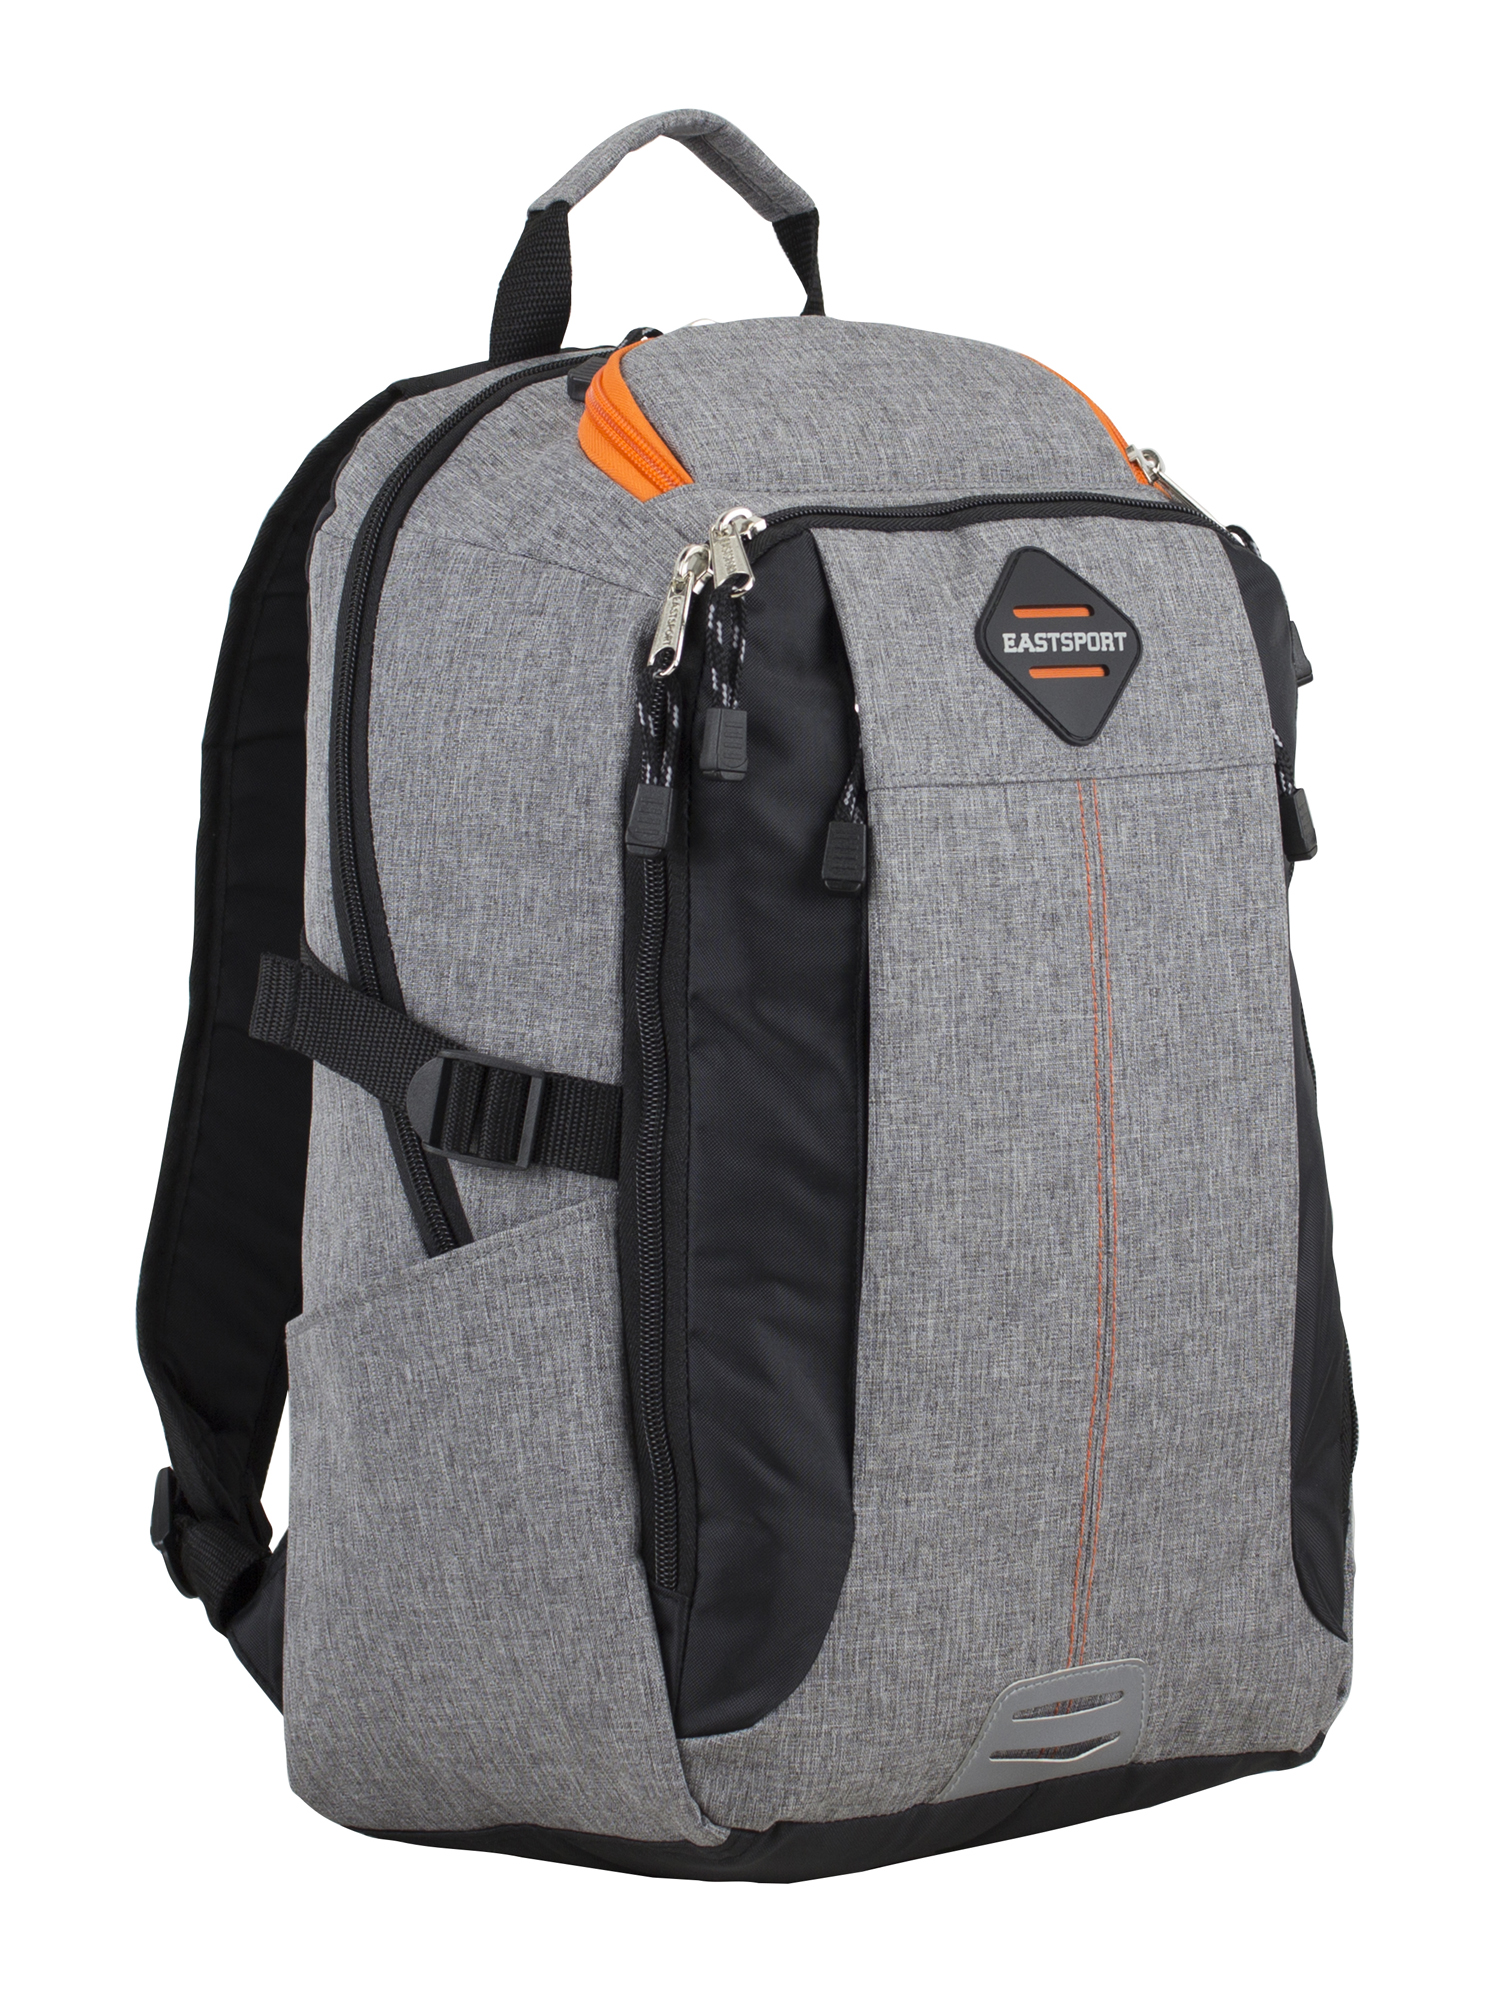 Eastsport Multi-Purpose Pro Defender Mid Grey Backpack with Adjustable Straps - image 1 of 6